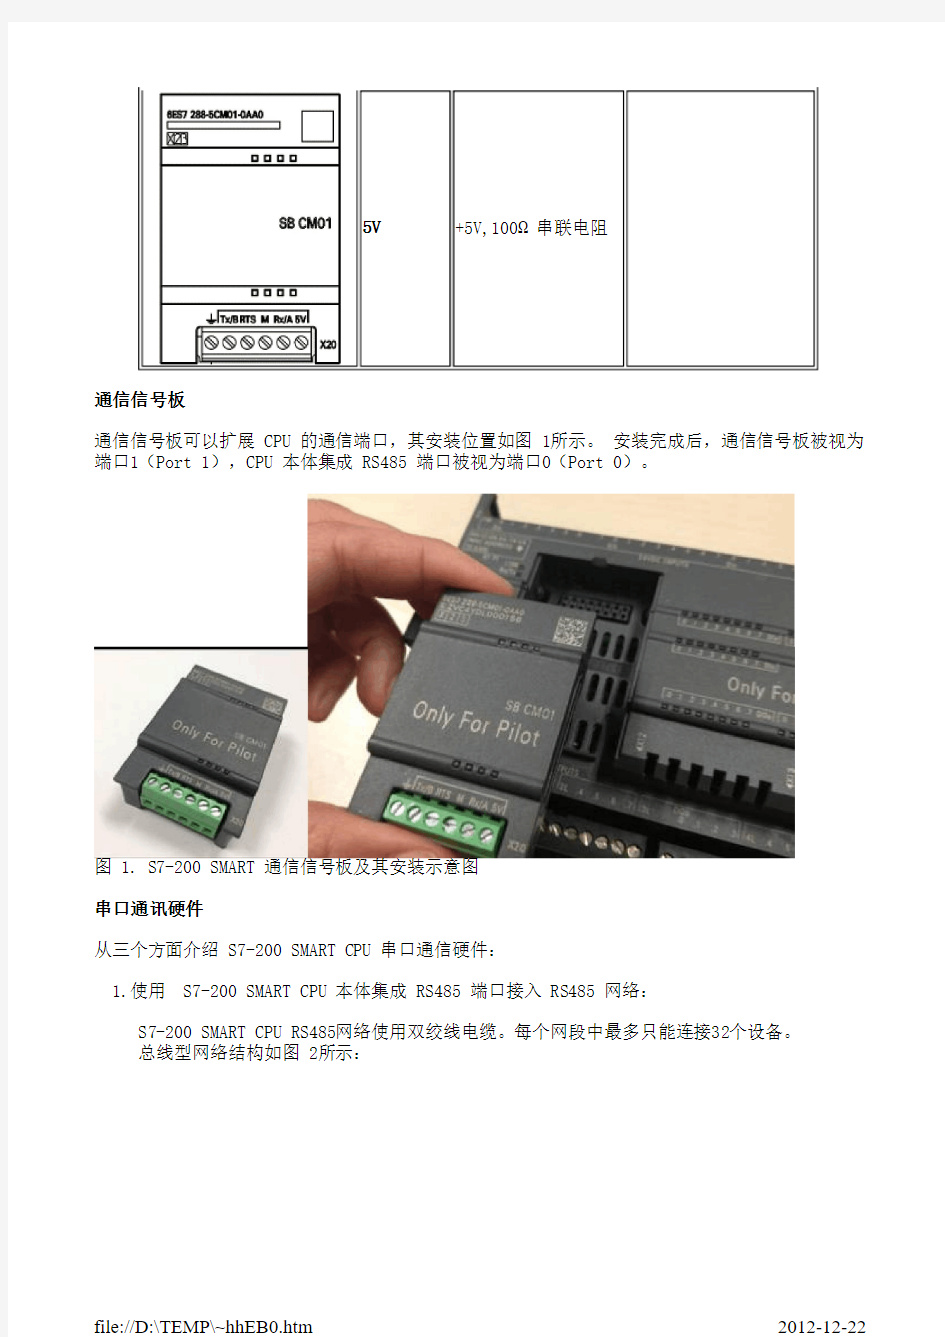 S7 200 SMART PLC 串口通信说明(图文并茂)